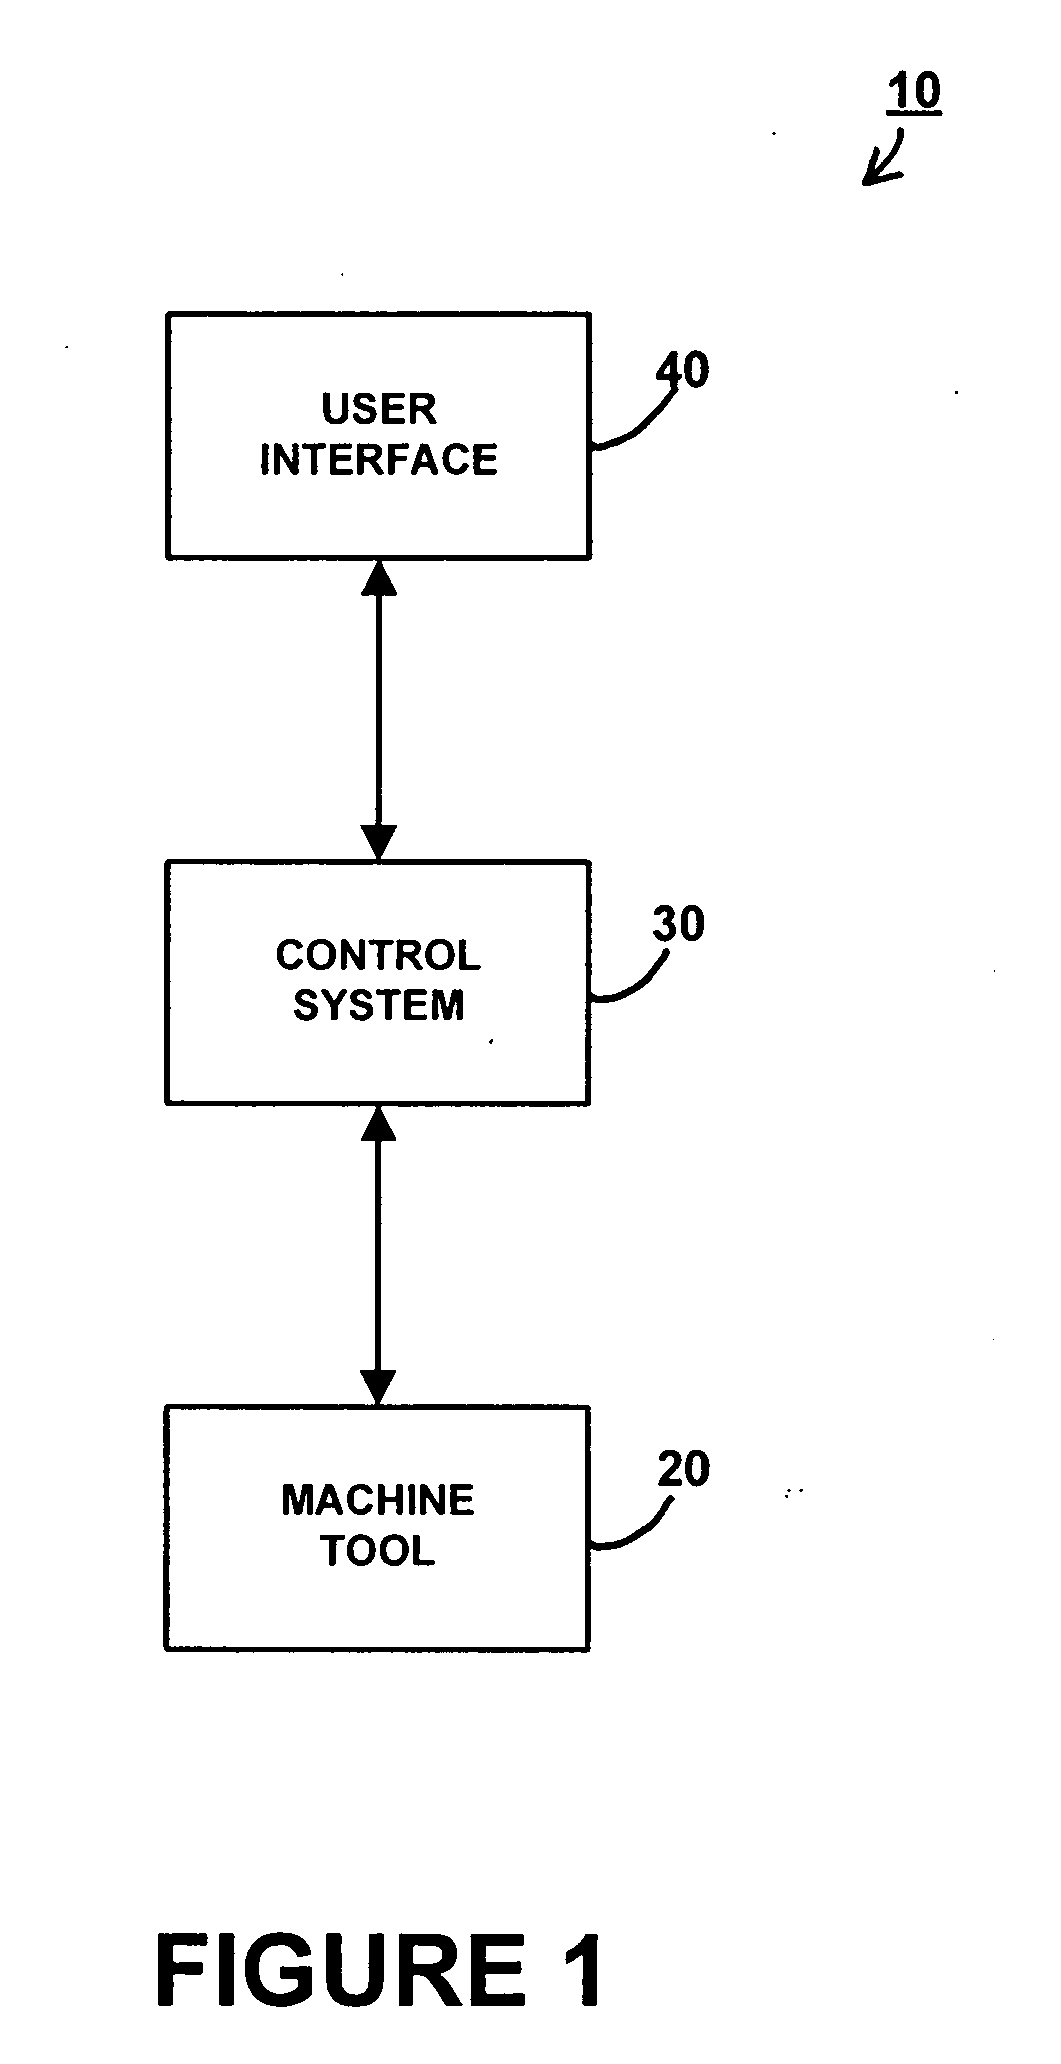 Machine tool control system